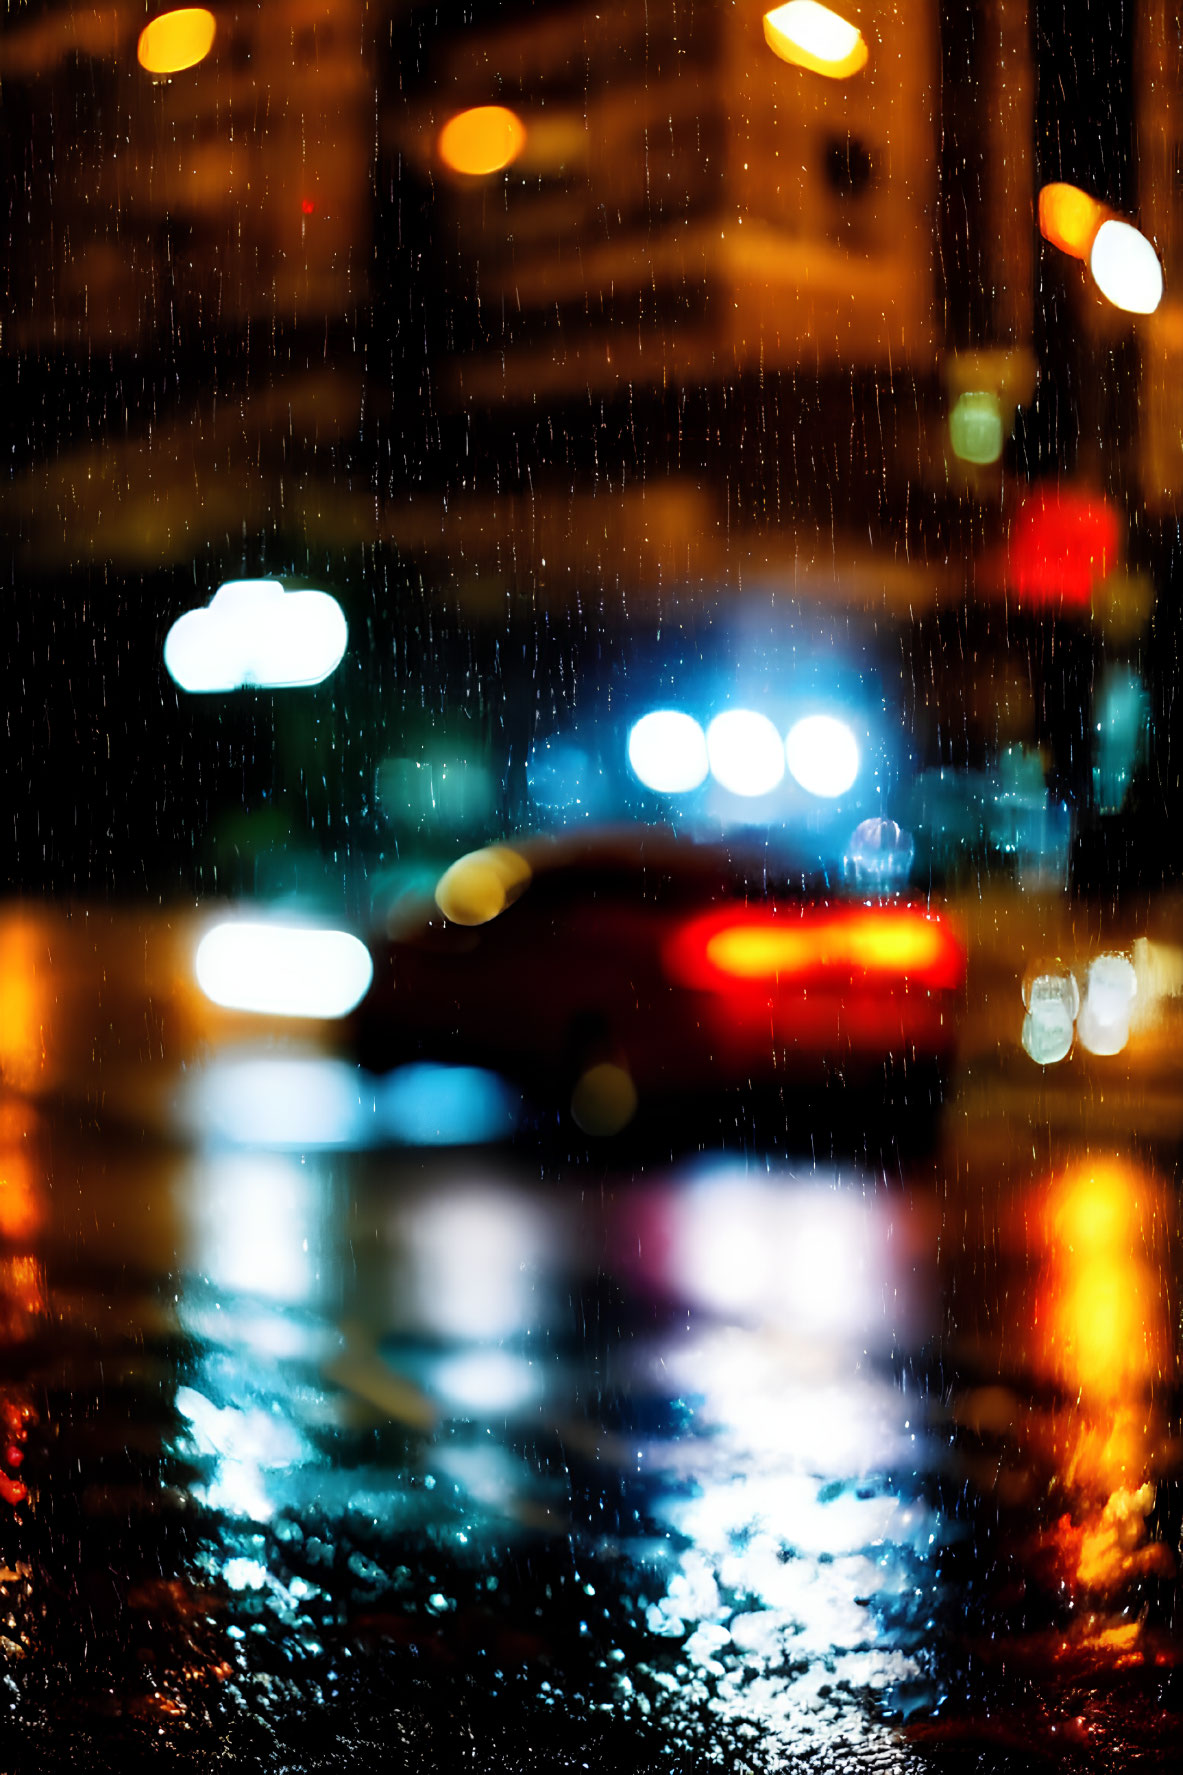 Blurred car tail lights on rain-soaked city street at night